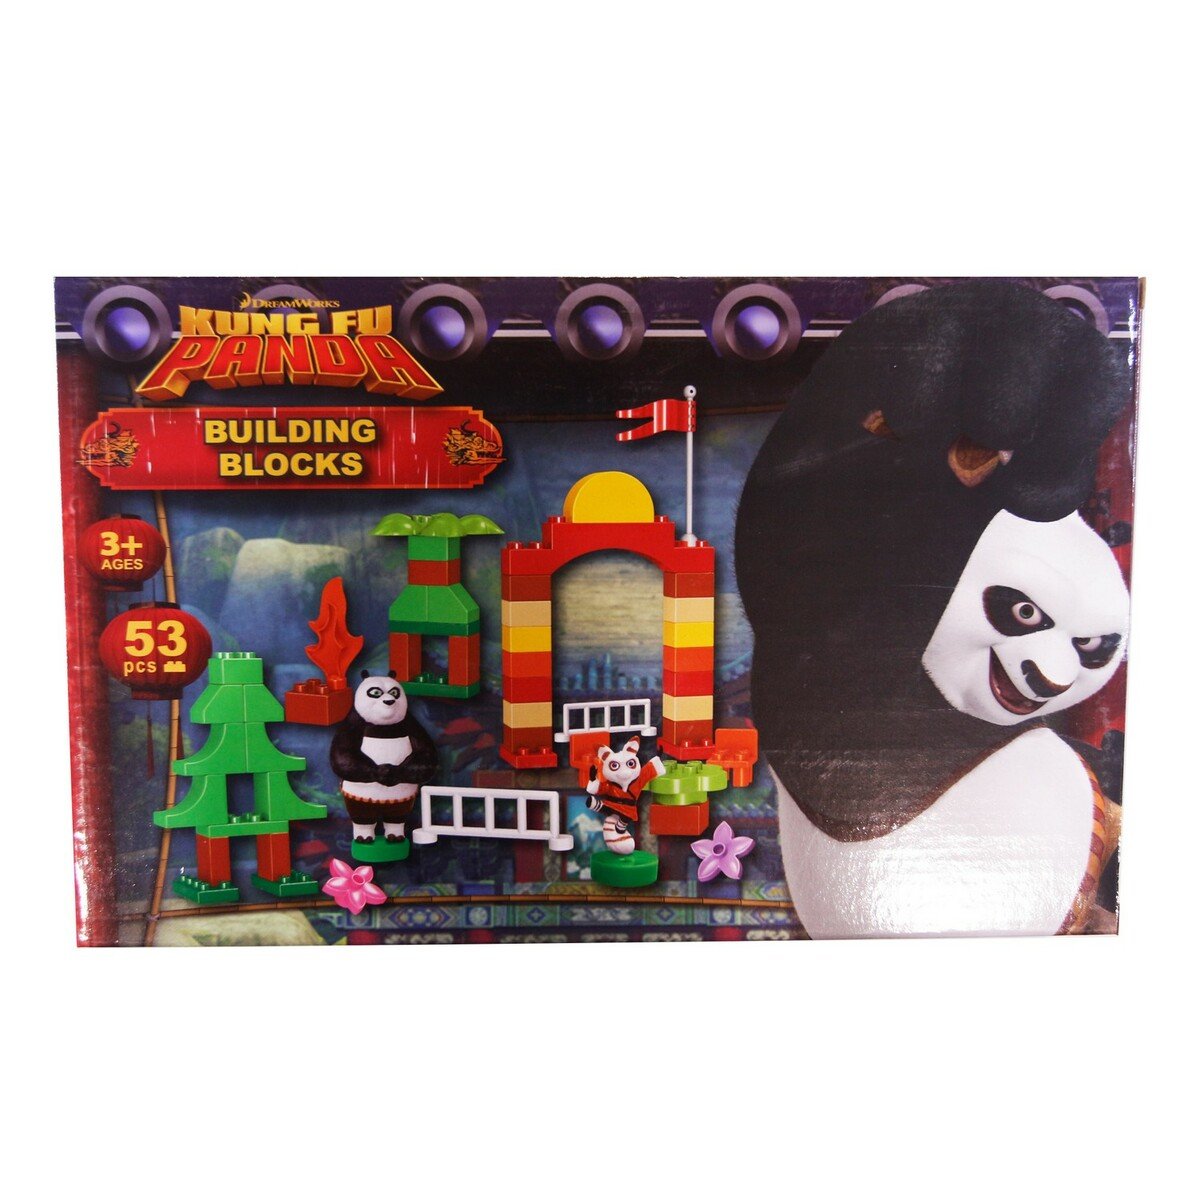 Kungfu Panda Brick 2299